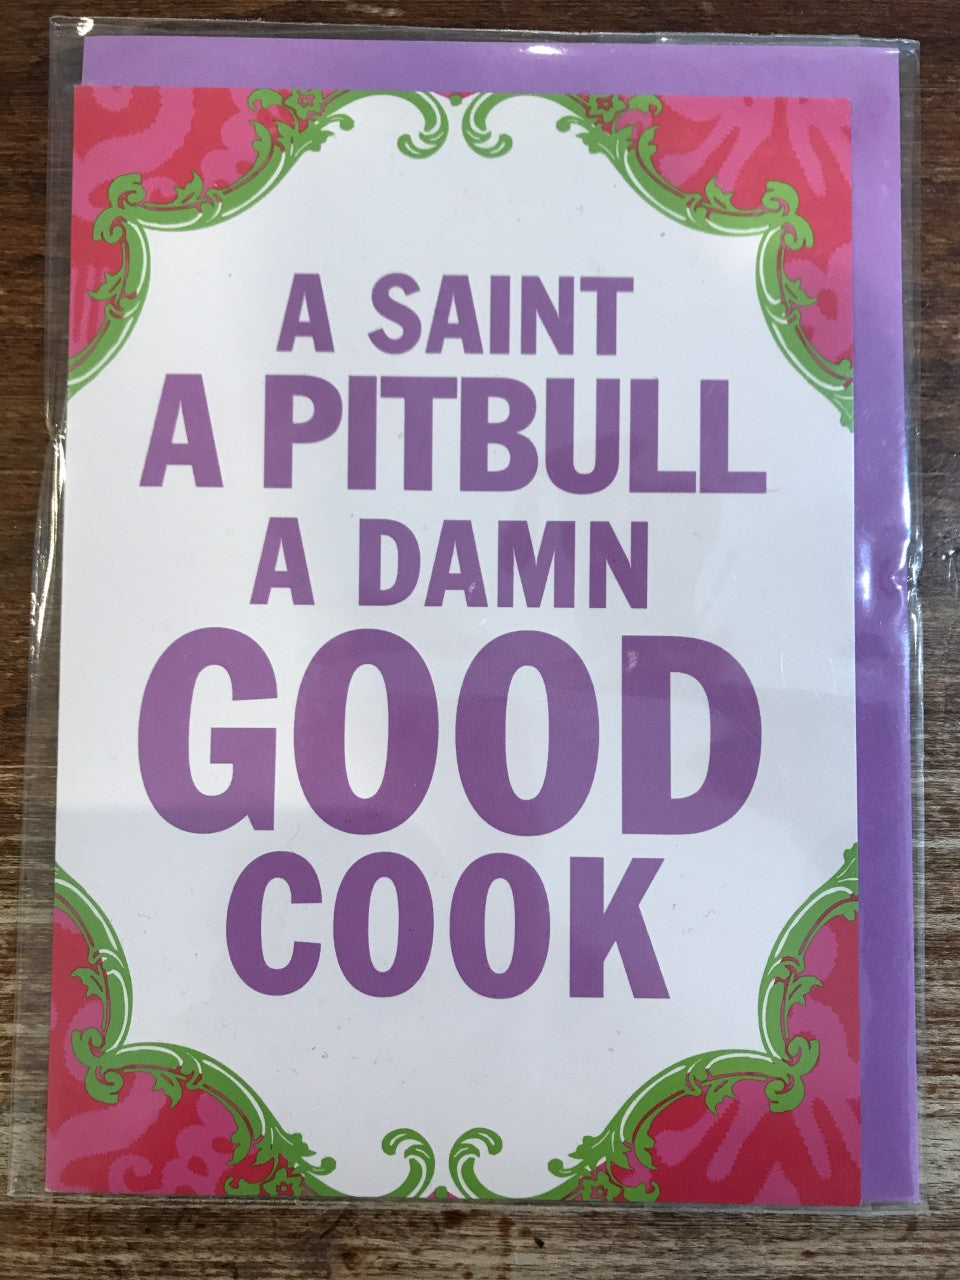 Calypso Mother's Day Card-Saint Pitbull